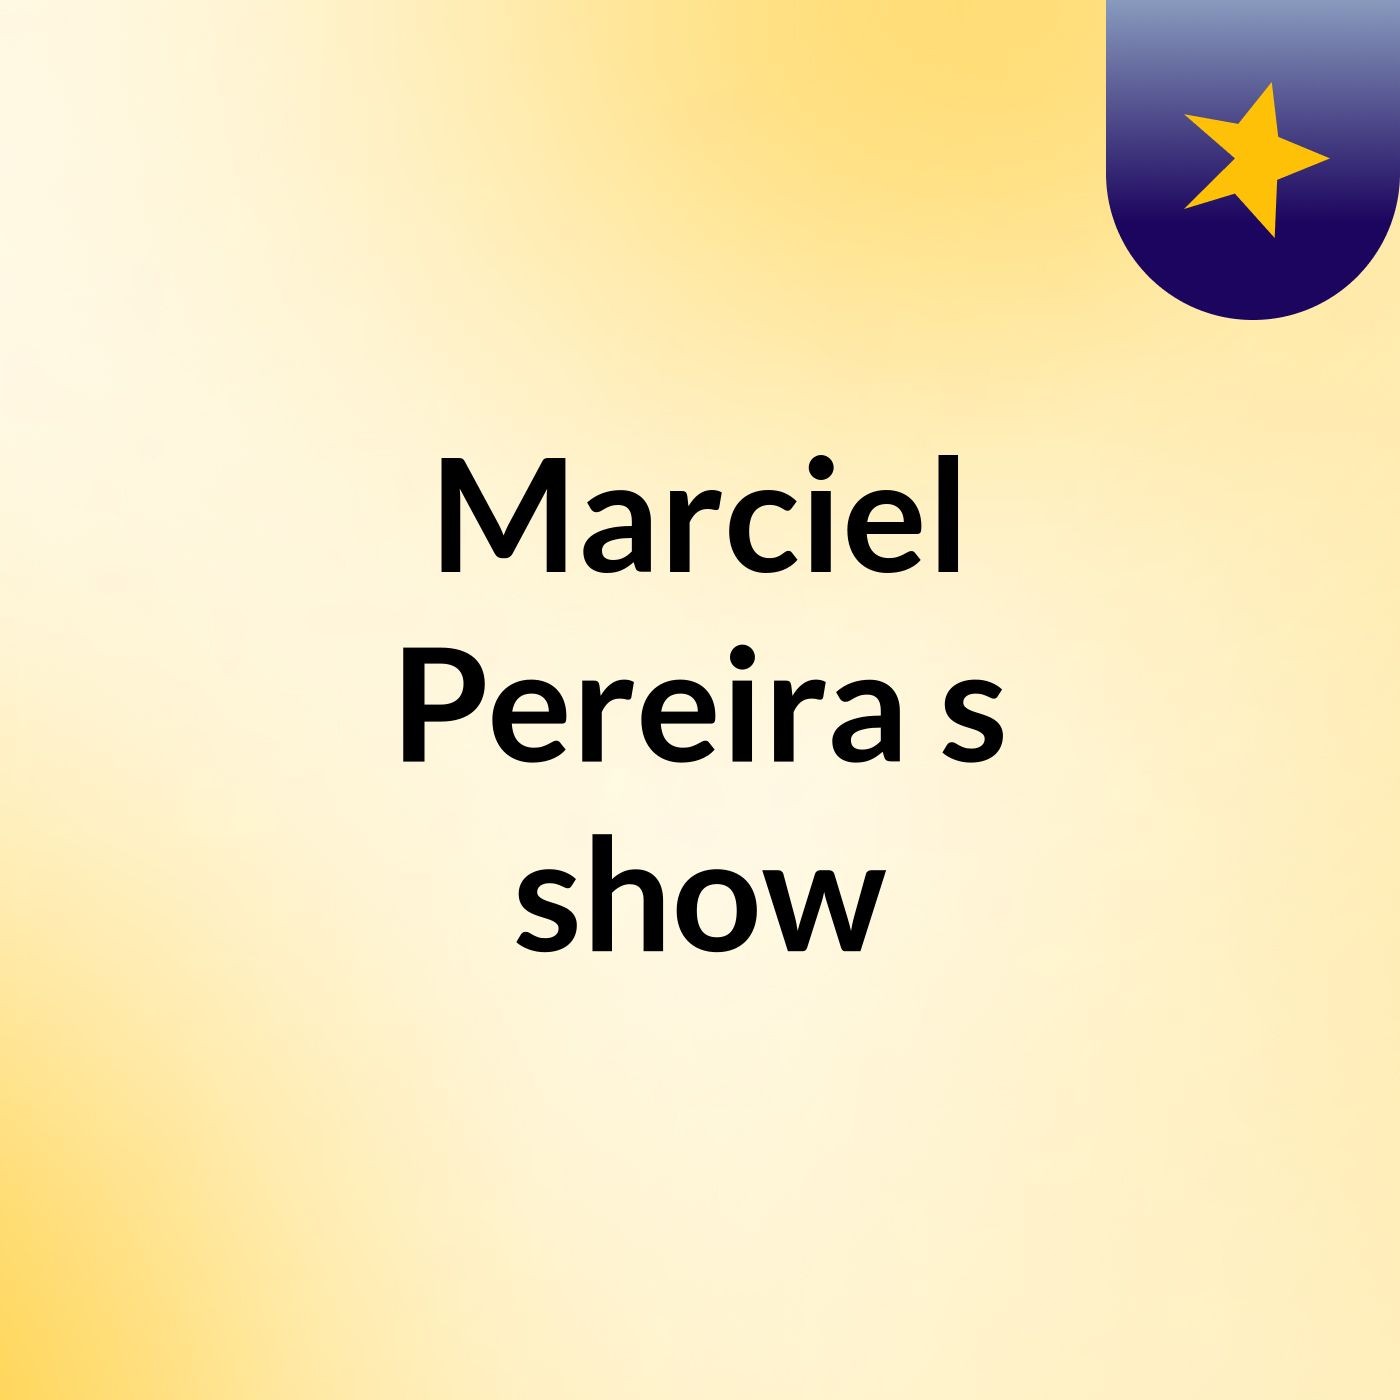 Marciel Pereira's show